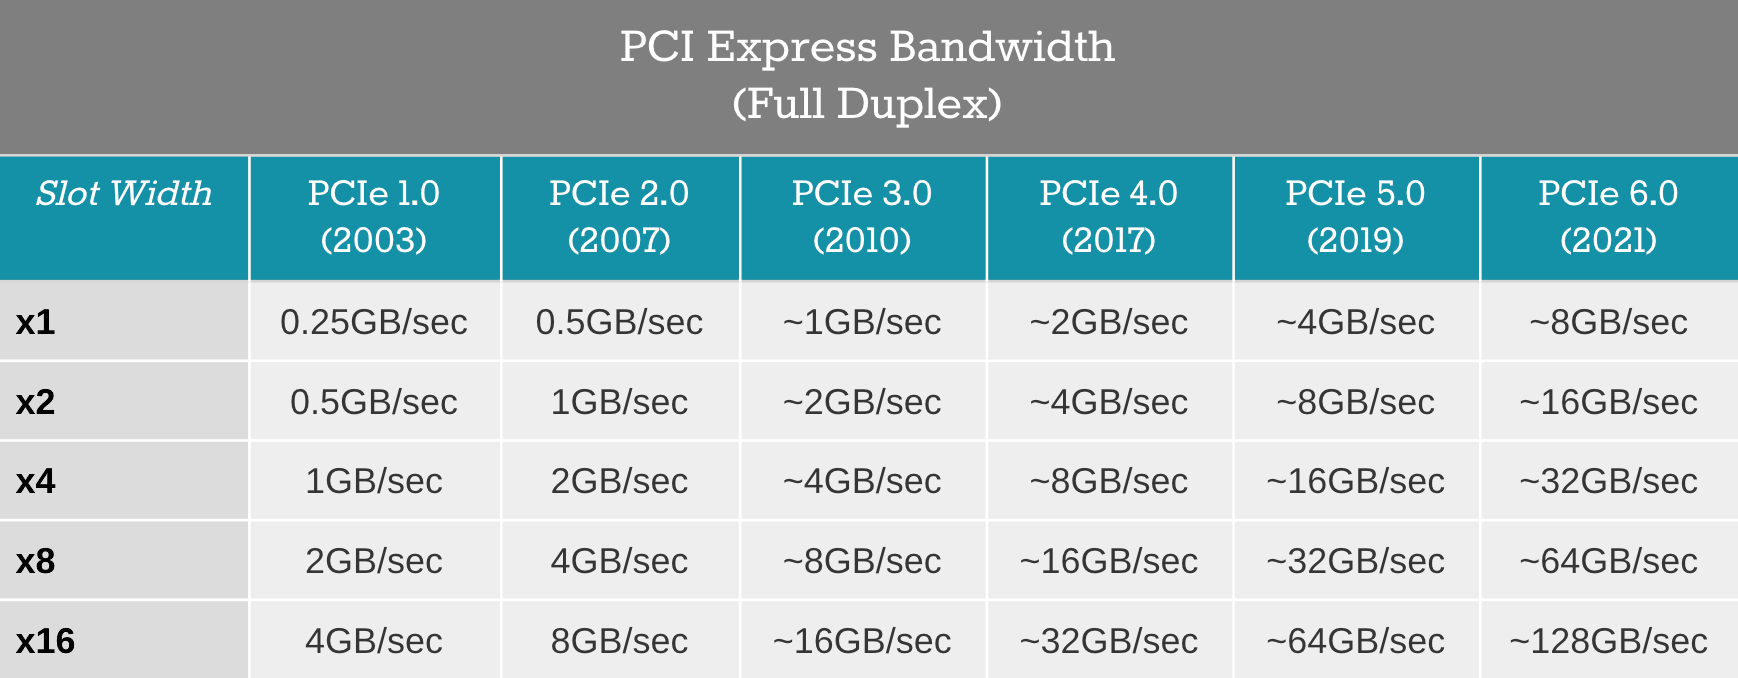 PCI Express bandwidth table